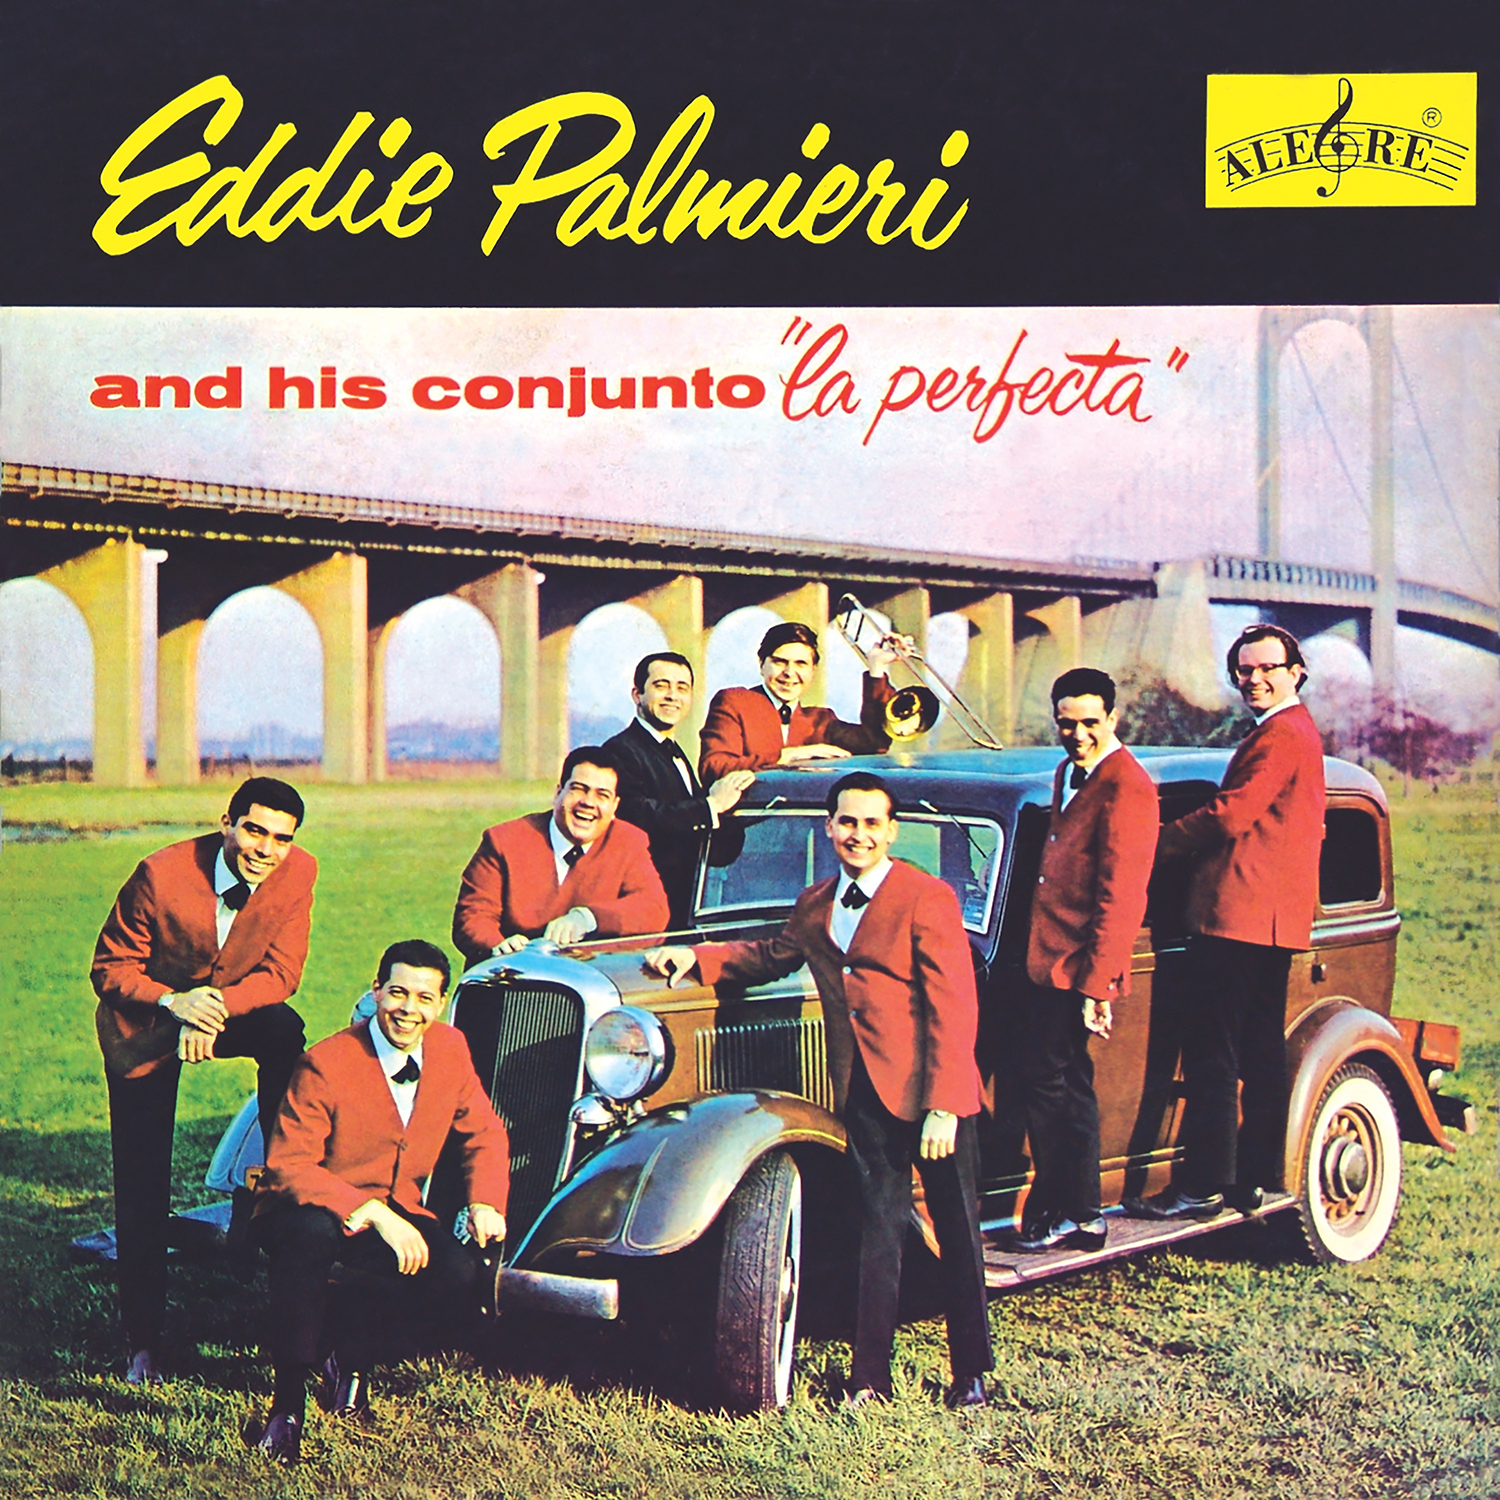 Featured image for “Eddie Palmieri and His Conjunto – La Perfecta”